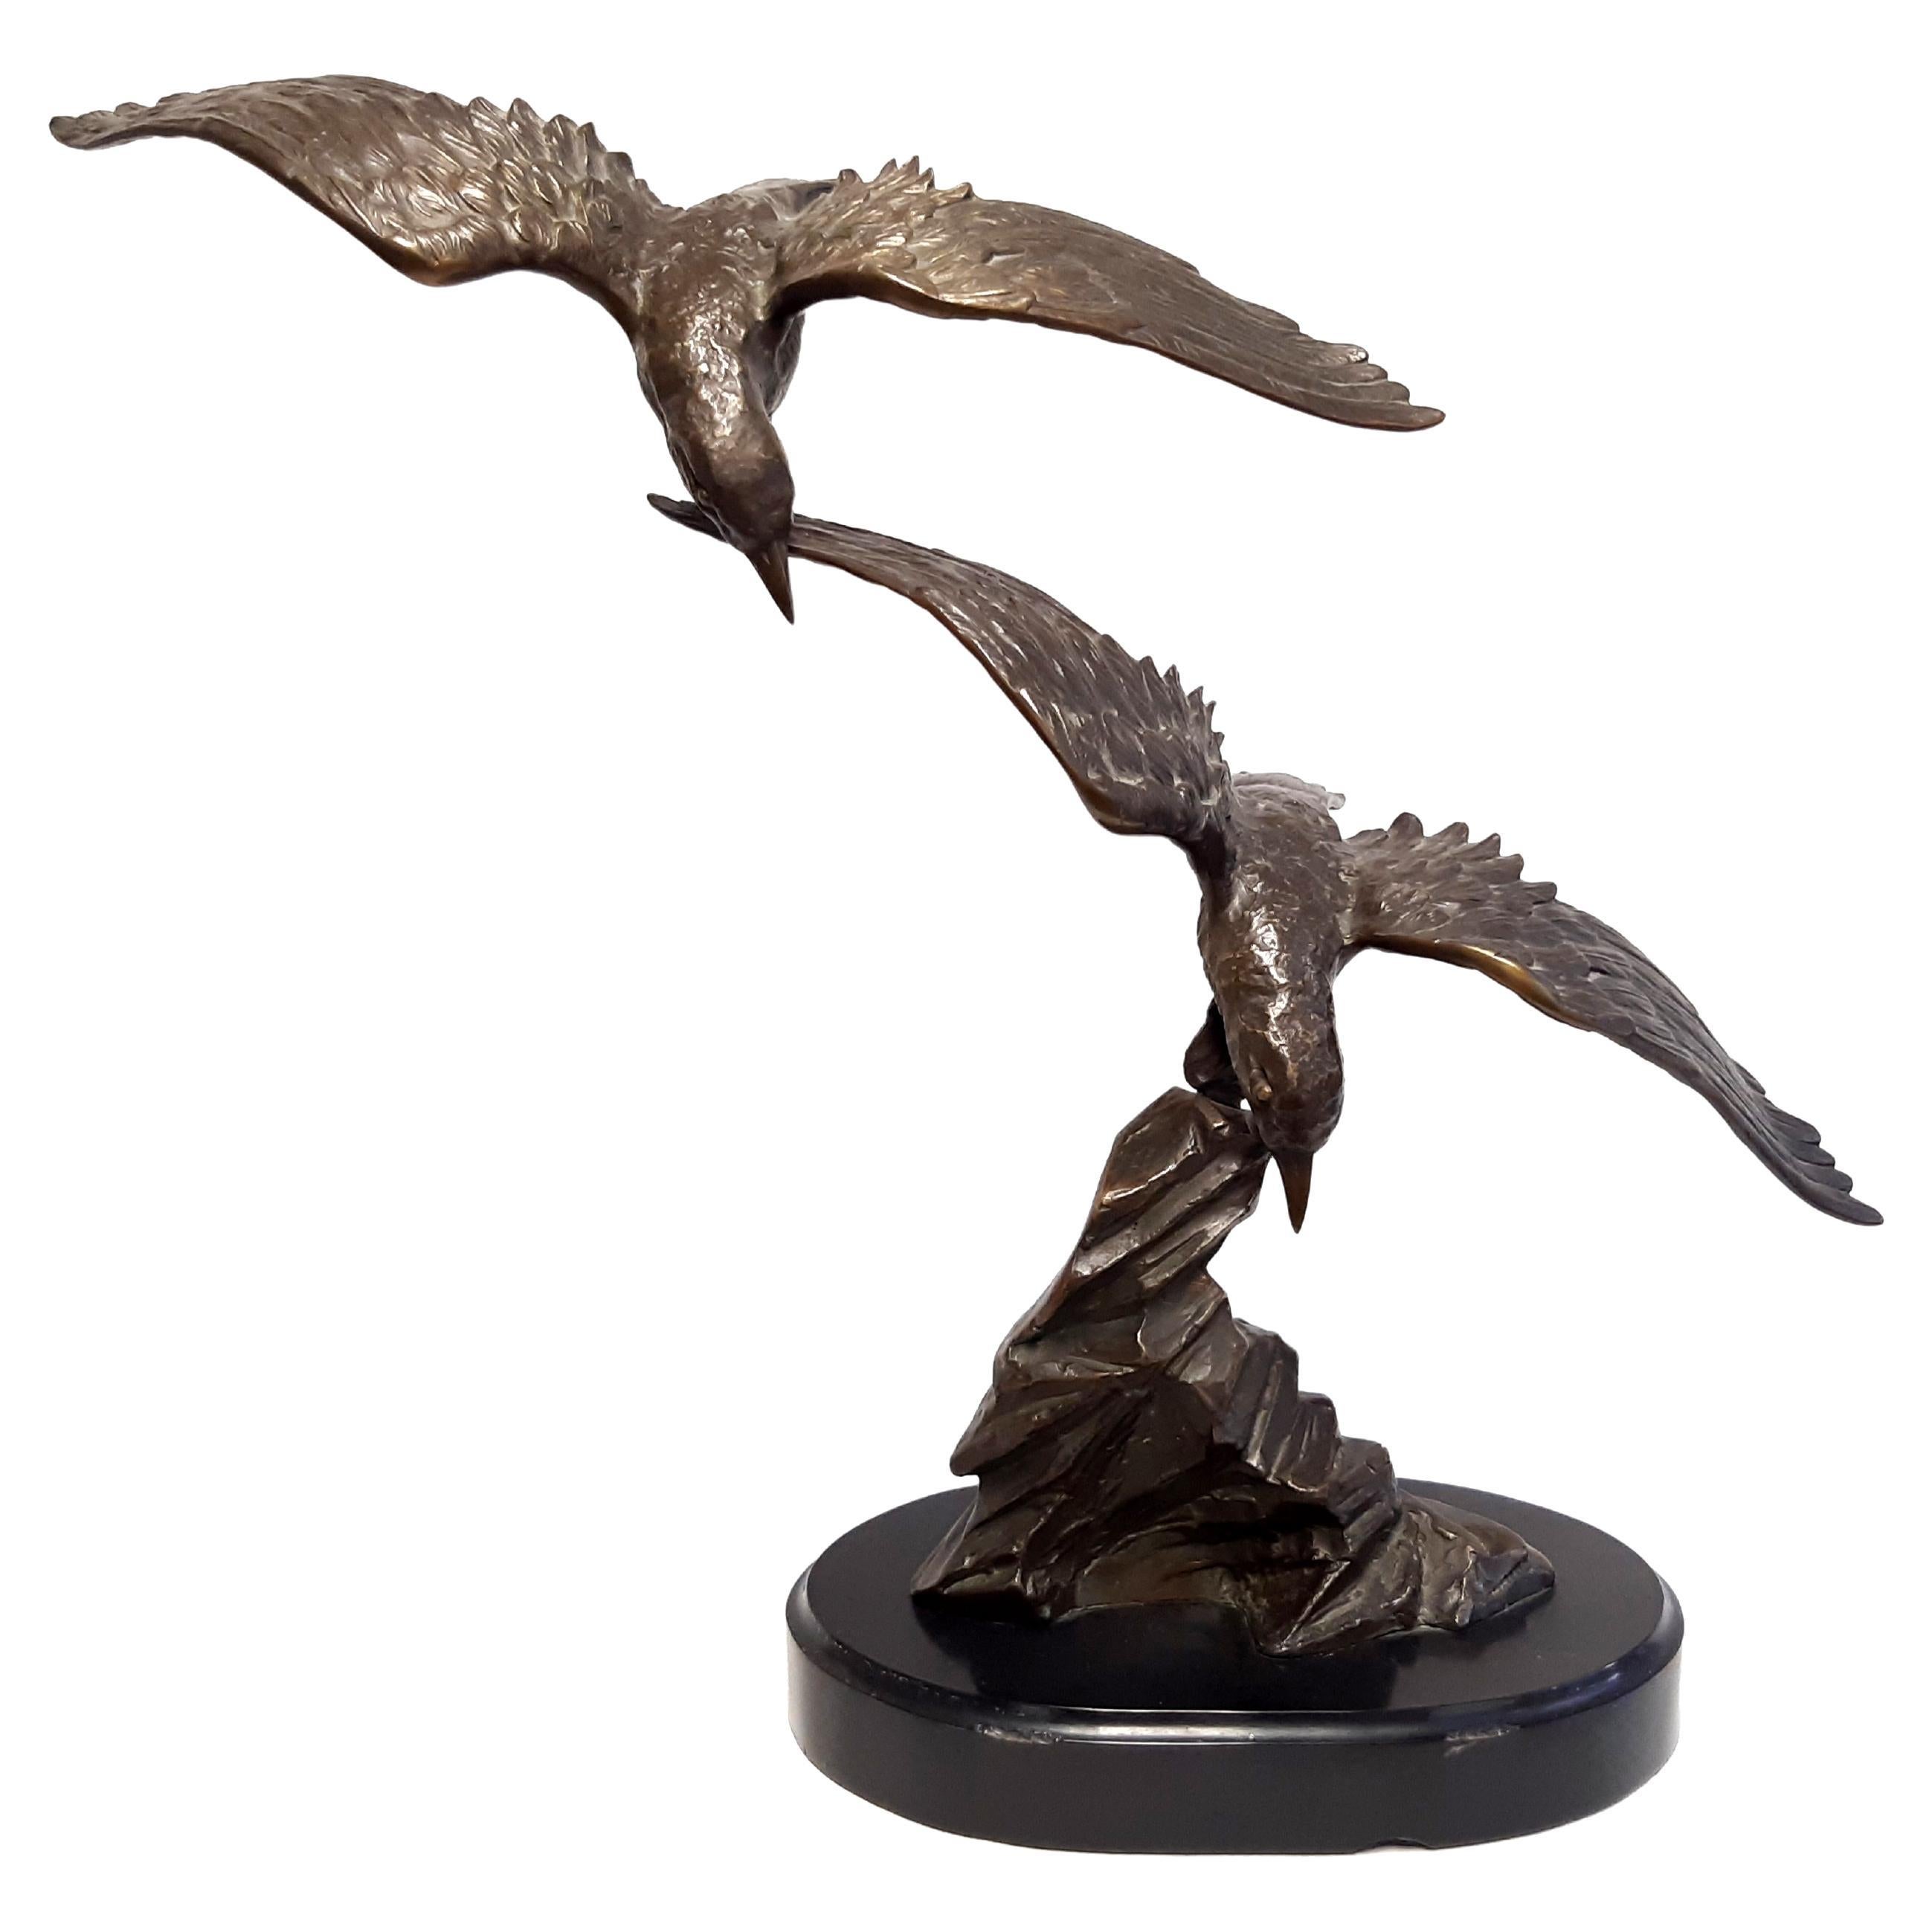 Tissot Bronzeskulptur "2 fliegende Möwen" - Bronzeskulptur "2 Flying Seagulls"